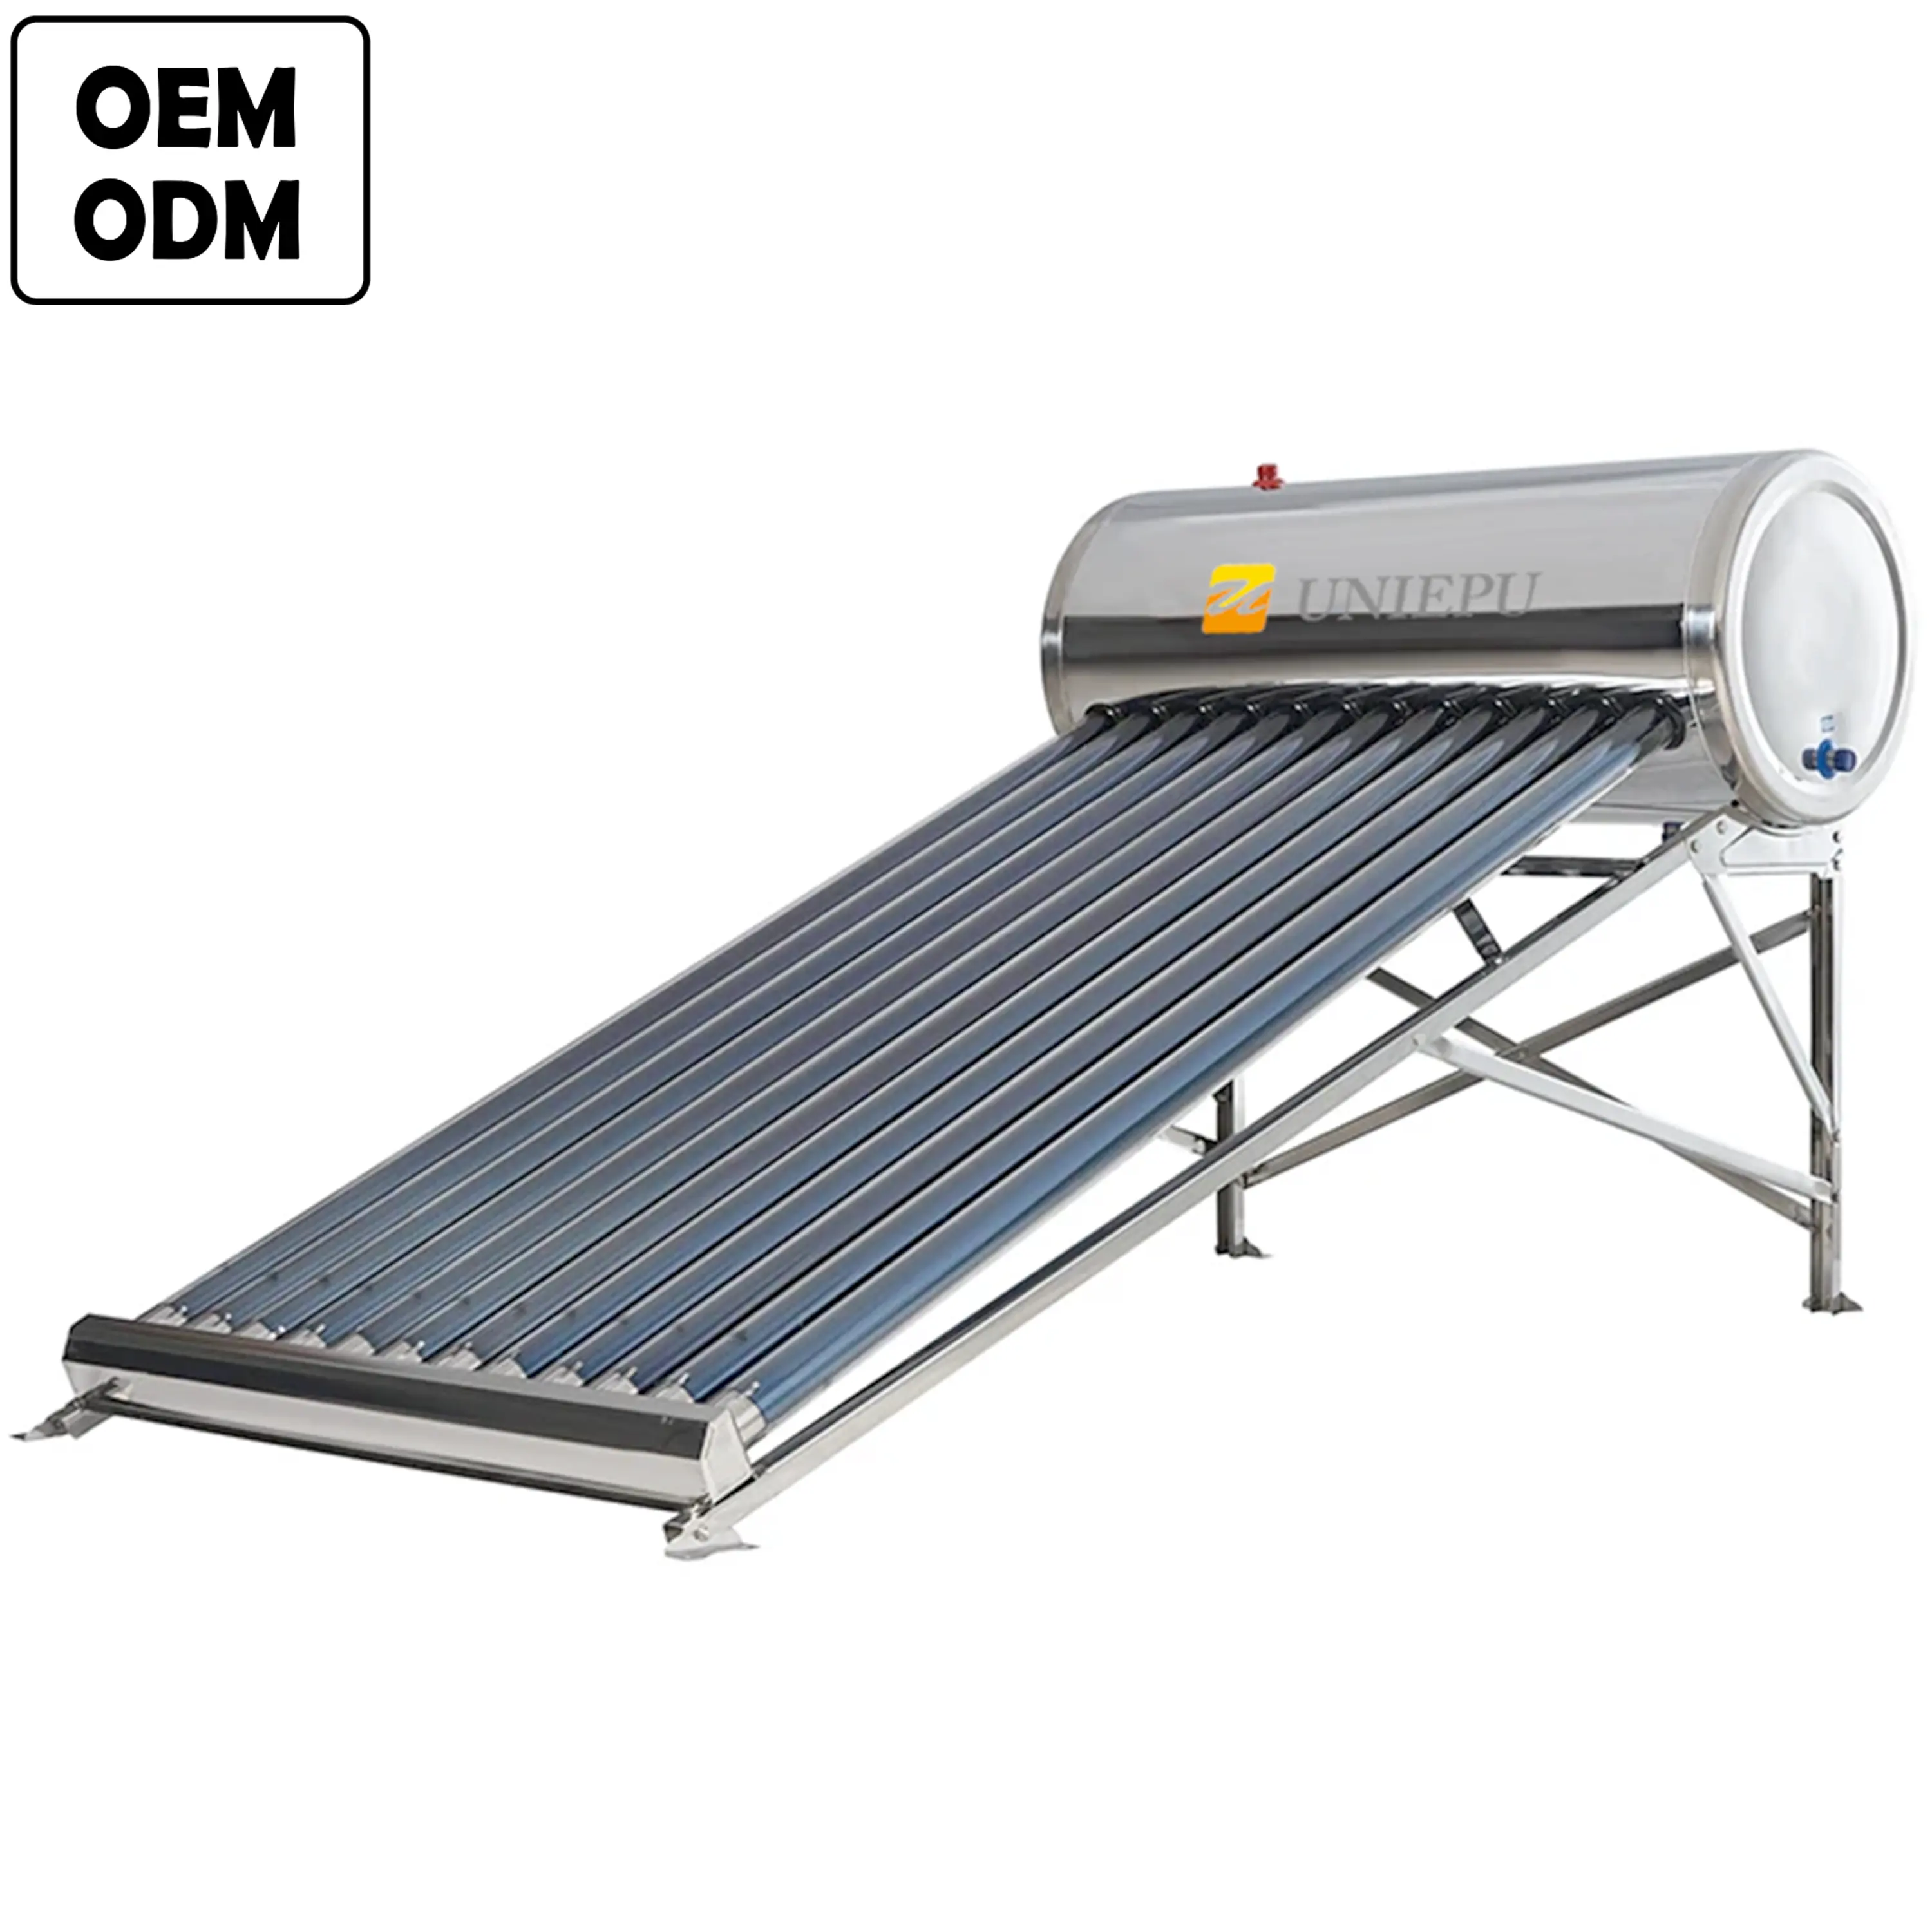 Calentador DE AGUA DE ACERO INOXIDABLE fácil de usar, tubo de vacío, calentadores Solares De 12 tubos, calentador de agua Solar sin presión